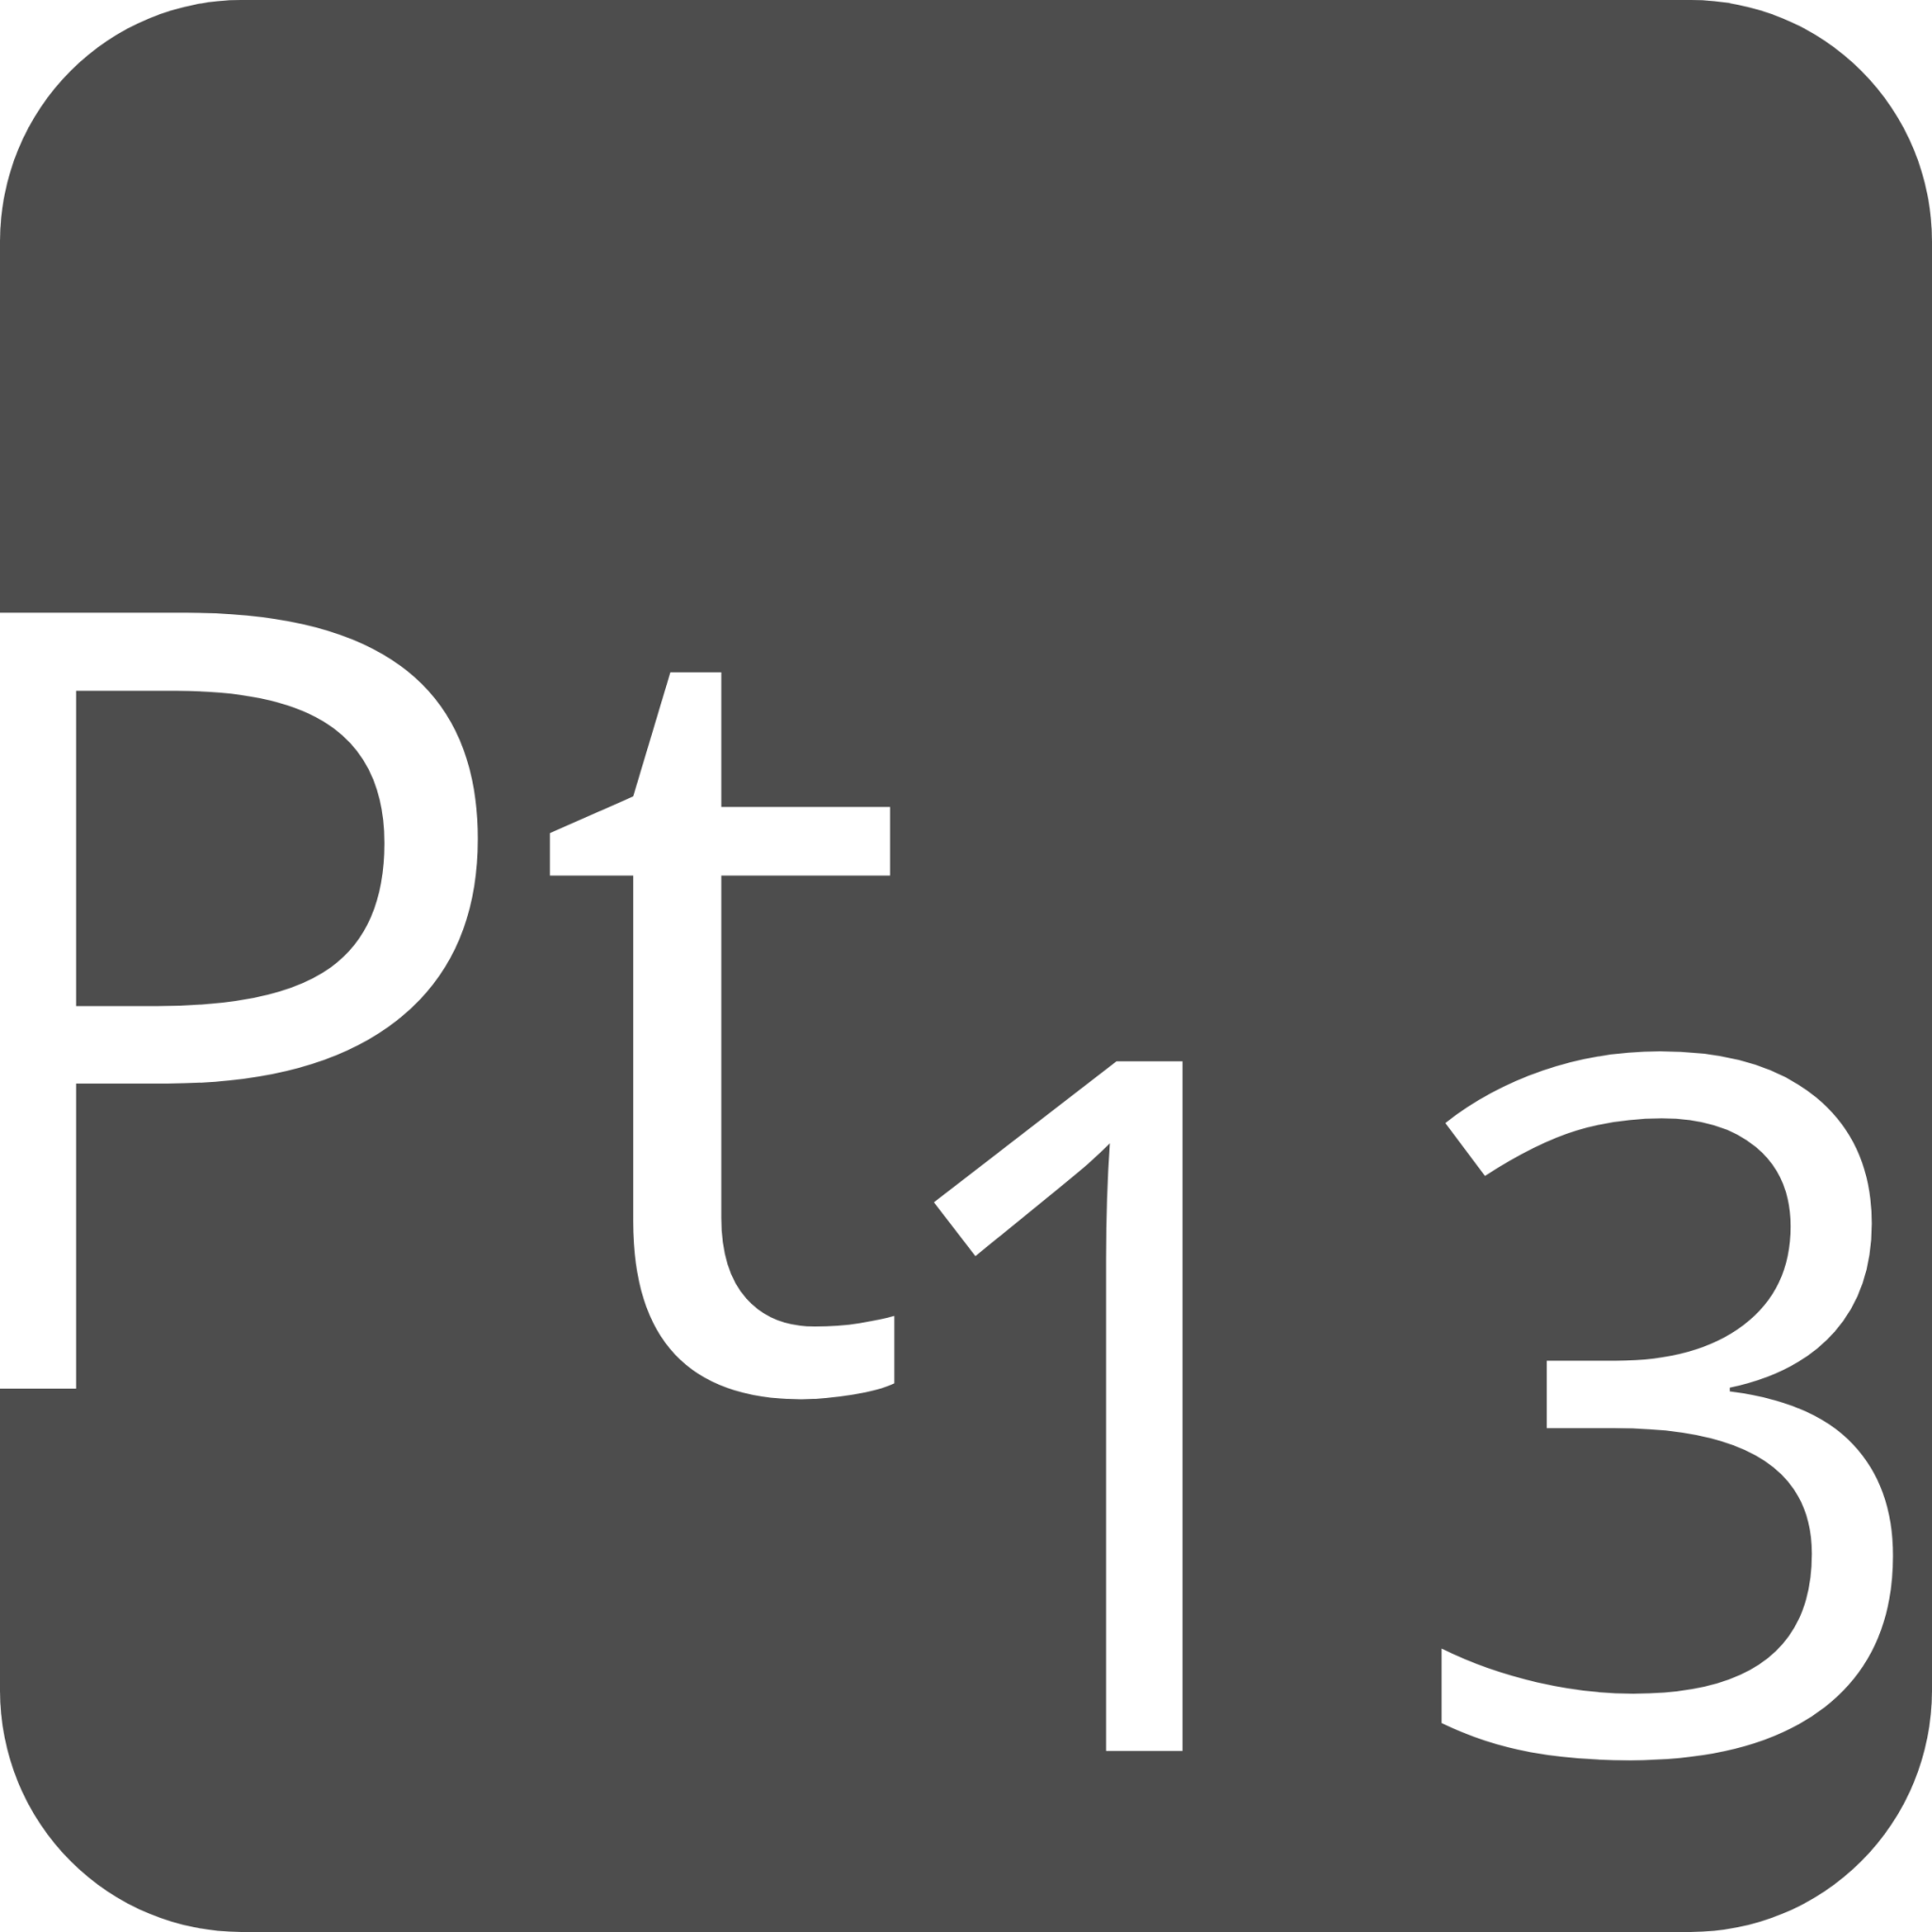 indicator keyboard Pt 13 icon